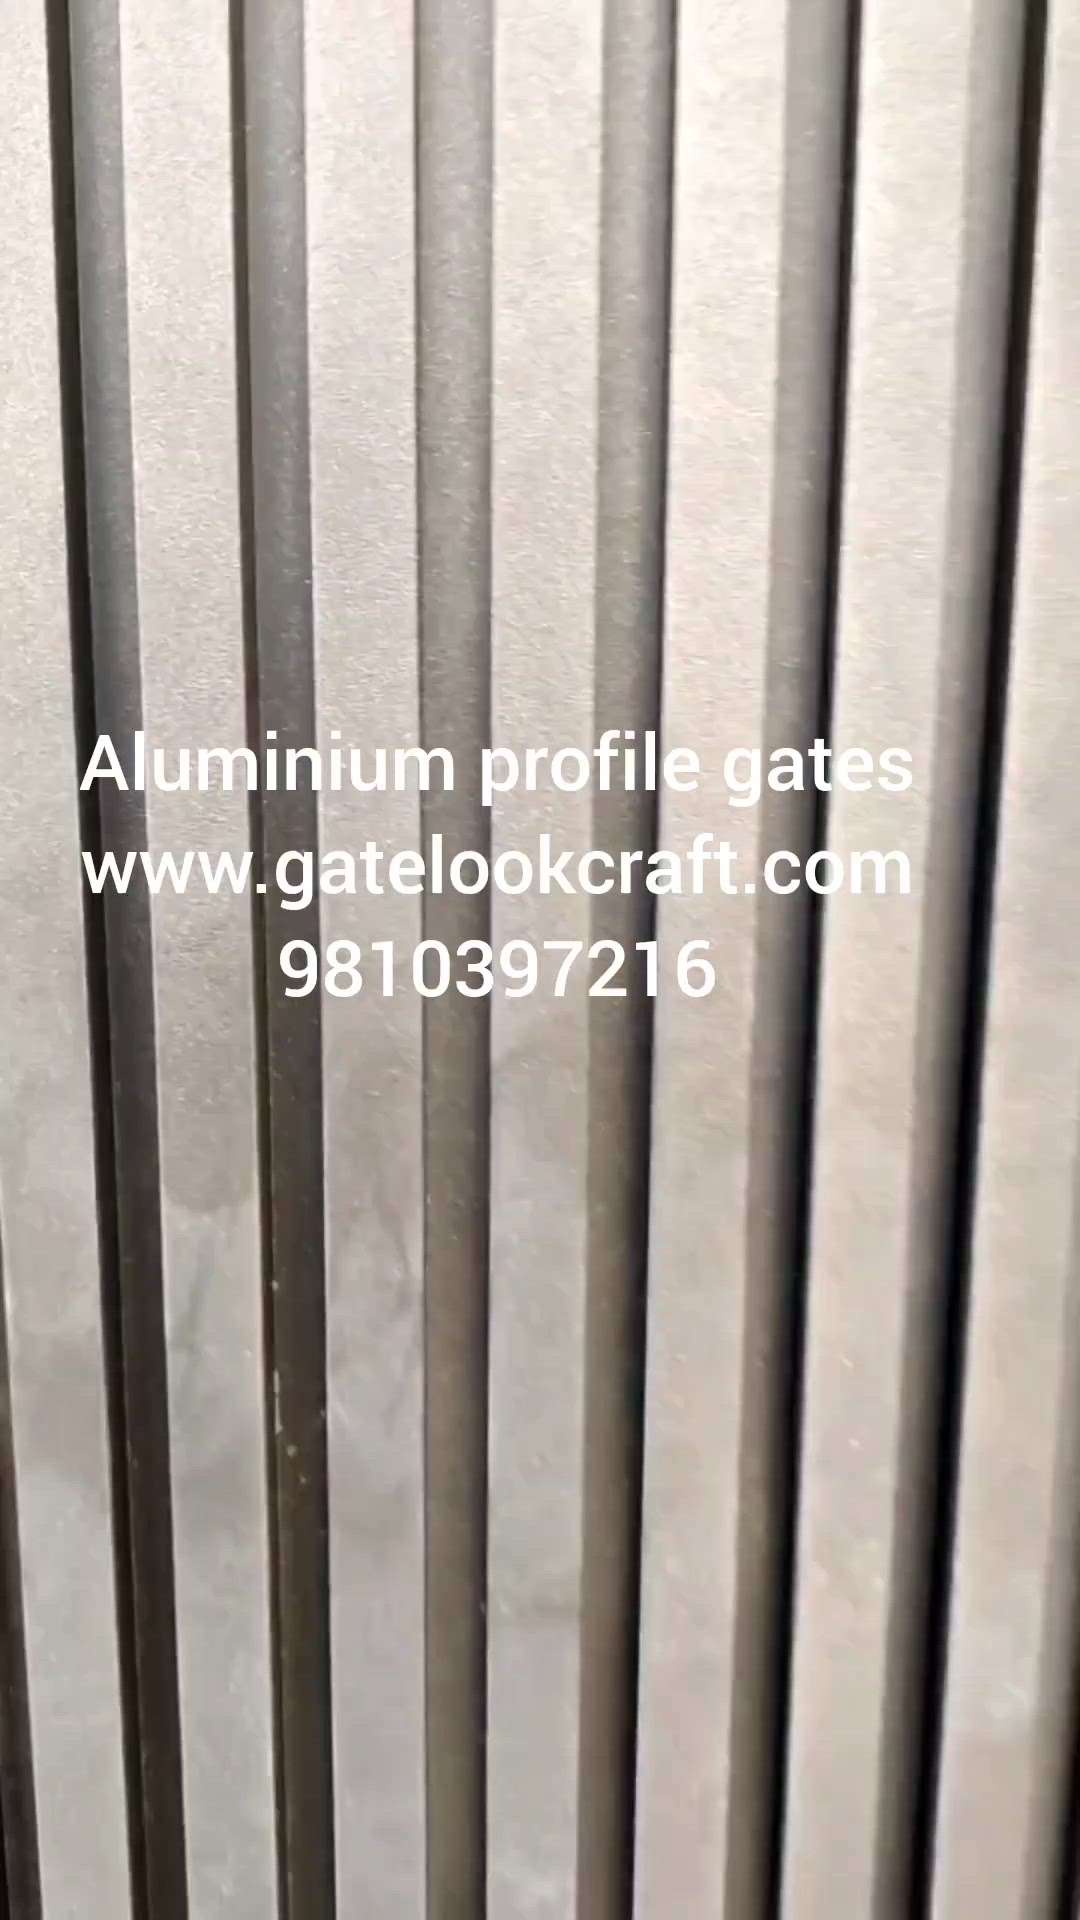 Aluminium profile gates by Hibza sterling interiors pvt ltd #gatelookcraft #aluminiumprofilegates #aluminiumgates #maingates #designer #gates #fancygates #powdercoatinggate